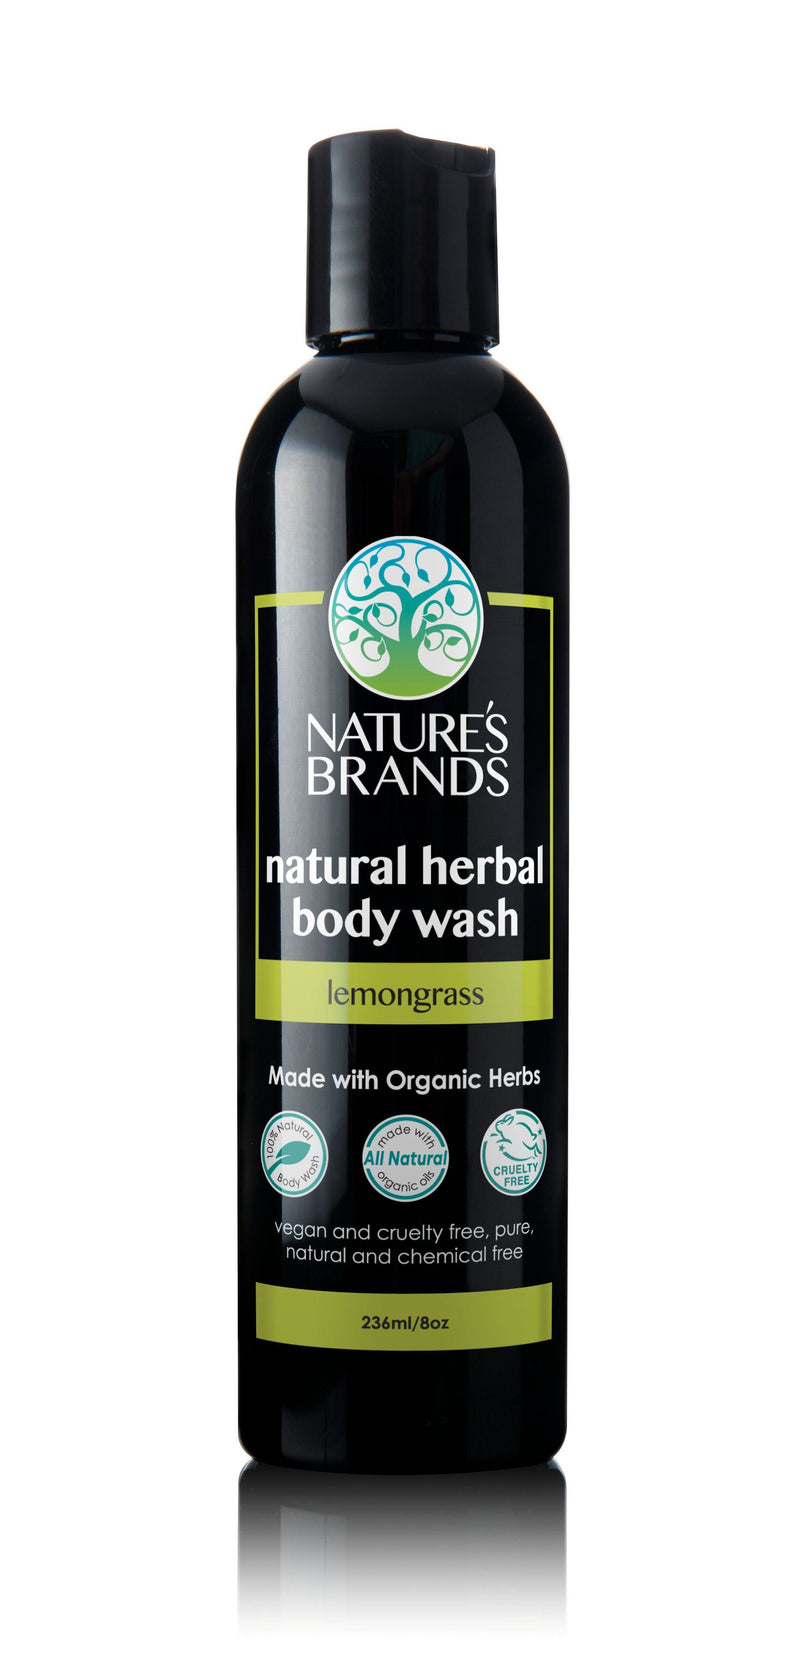 Herbal Choice Mari Organic Herbal Body Wash, Lemongrass - Herbal Choice Mari Organic Herbal Body Wash, Lemongrass - Herbal Choice Mari Organic Herbal Body Wash, Lemongrass